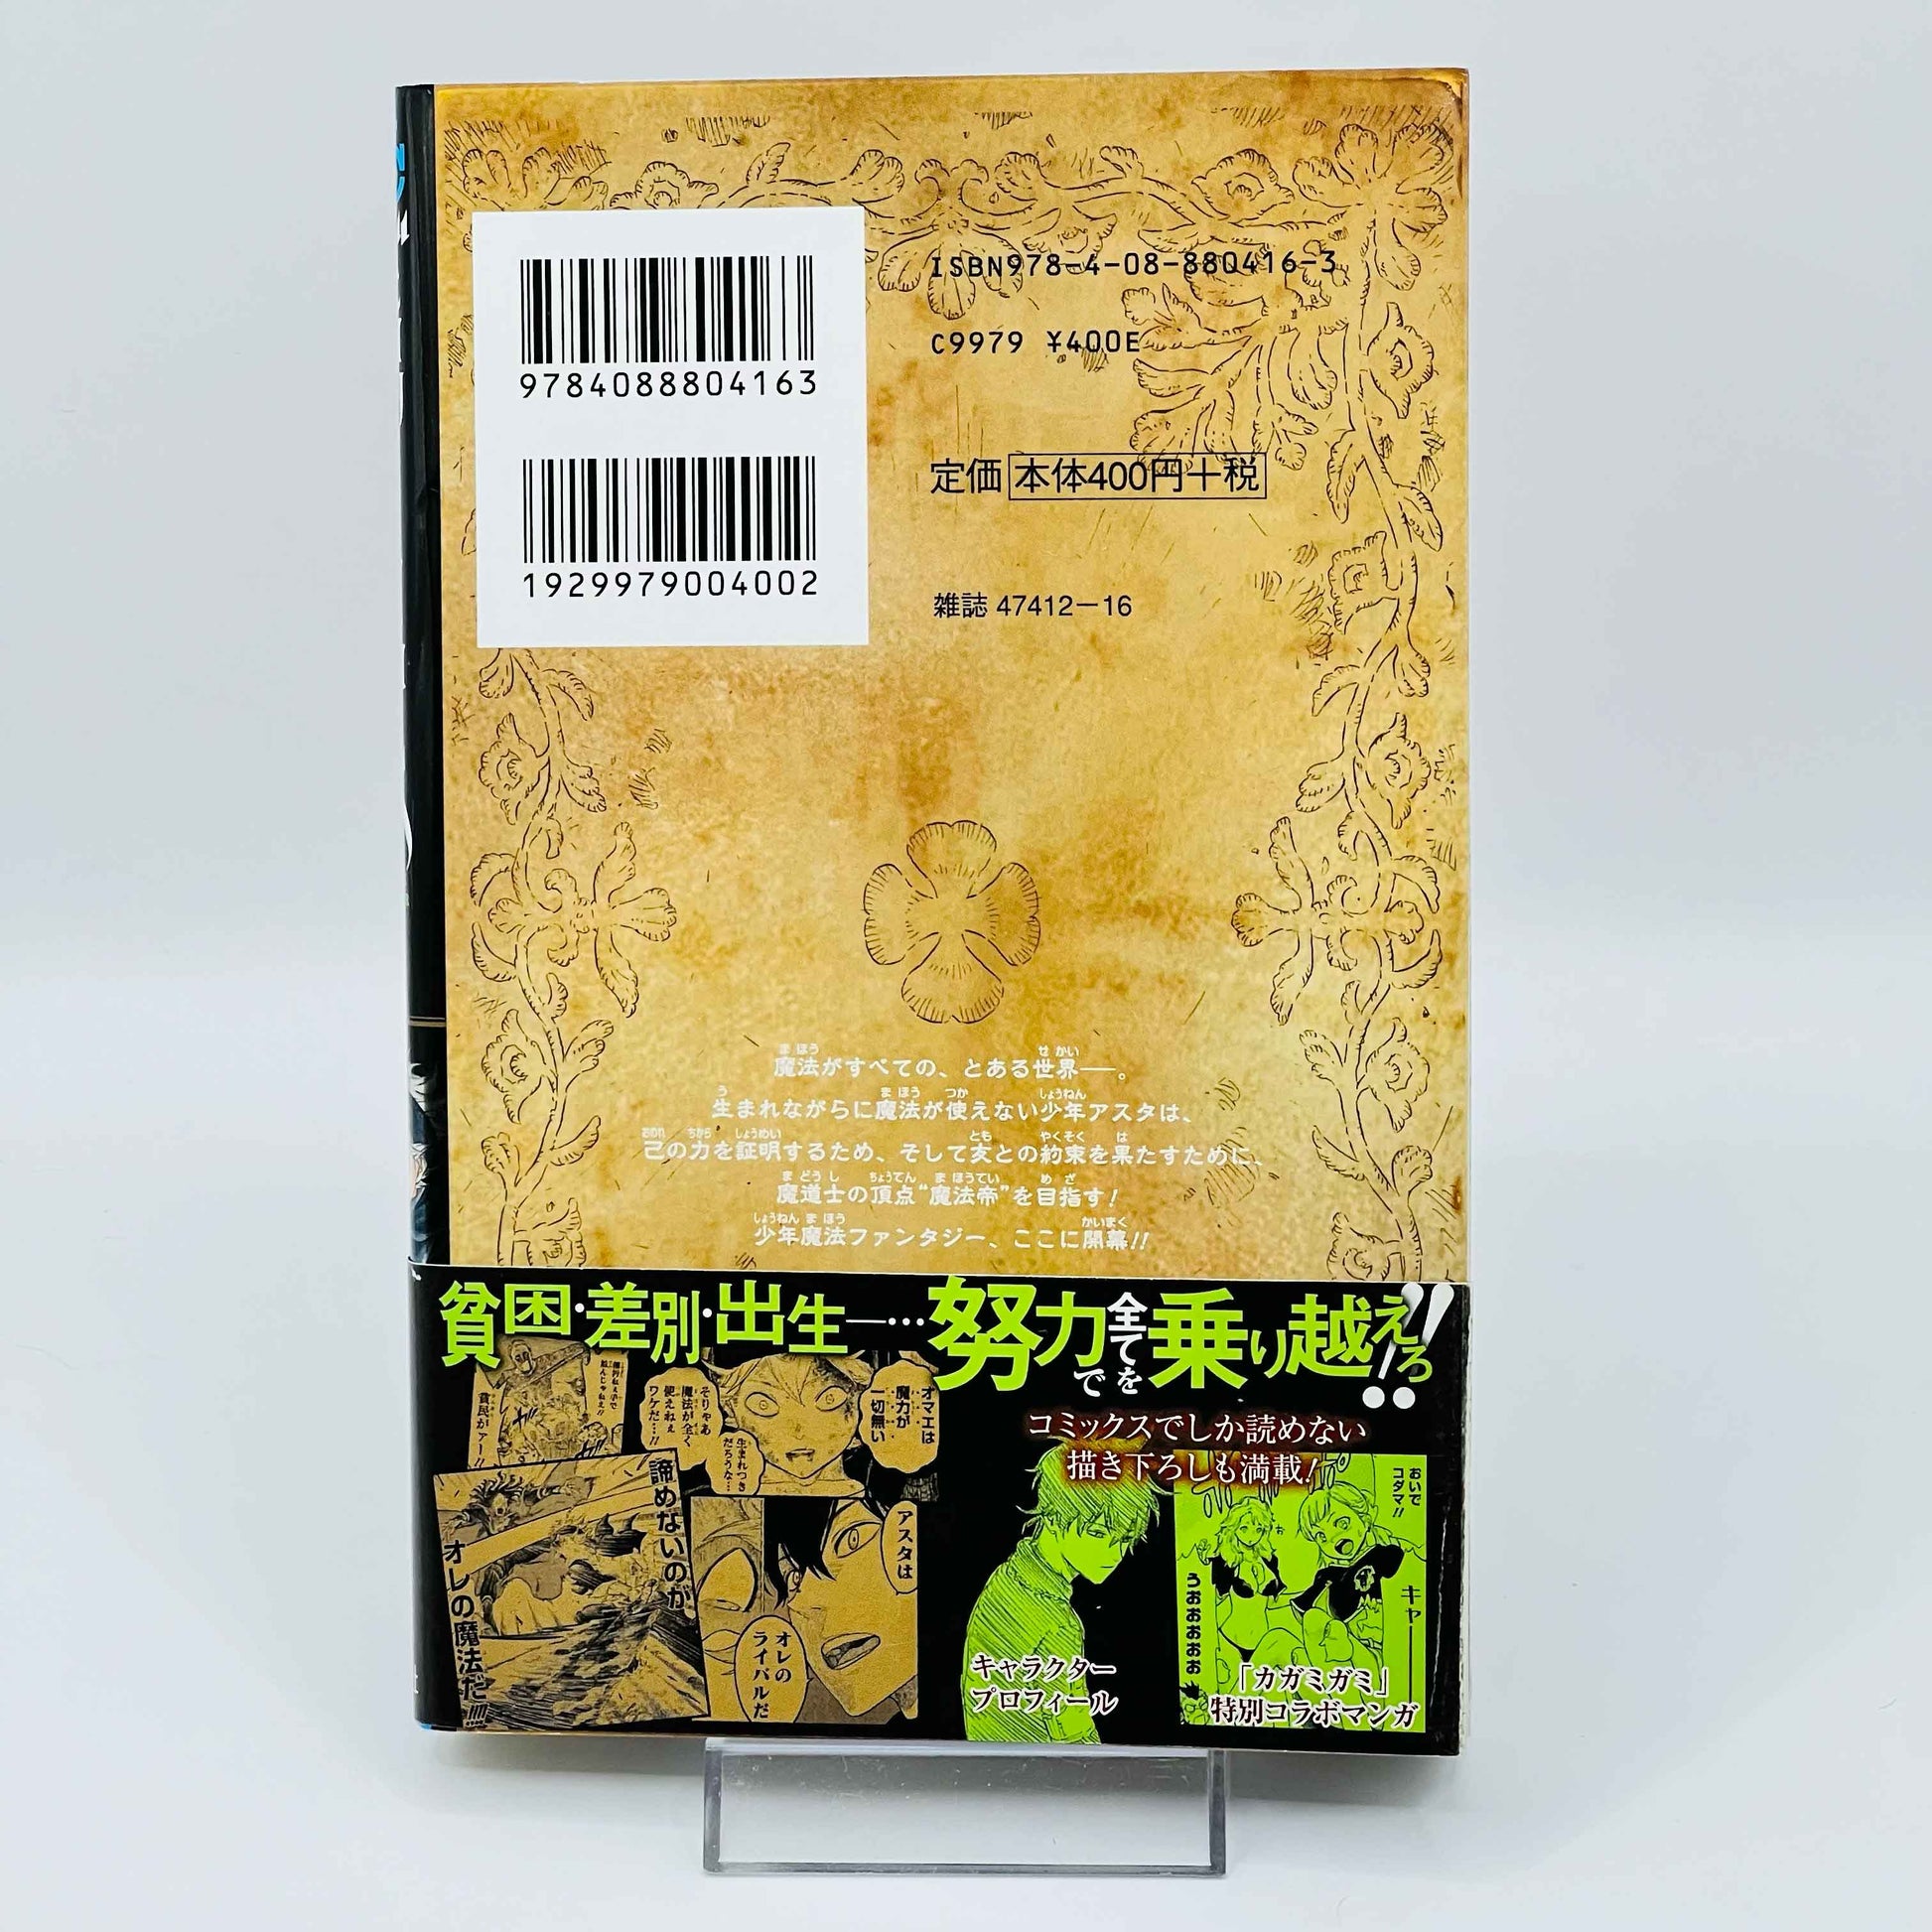 「Wish - Reserved」Black Clover - Volume 01 /w Obi - 1stPrint.net - 1st First Print Edition Manga Store - M-BLACKCLOVER-01-006